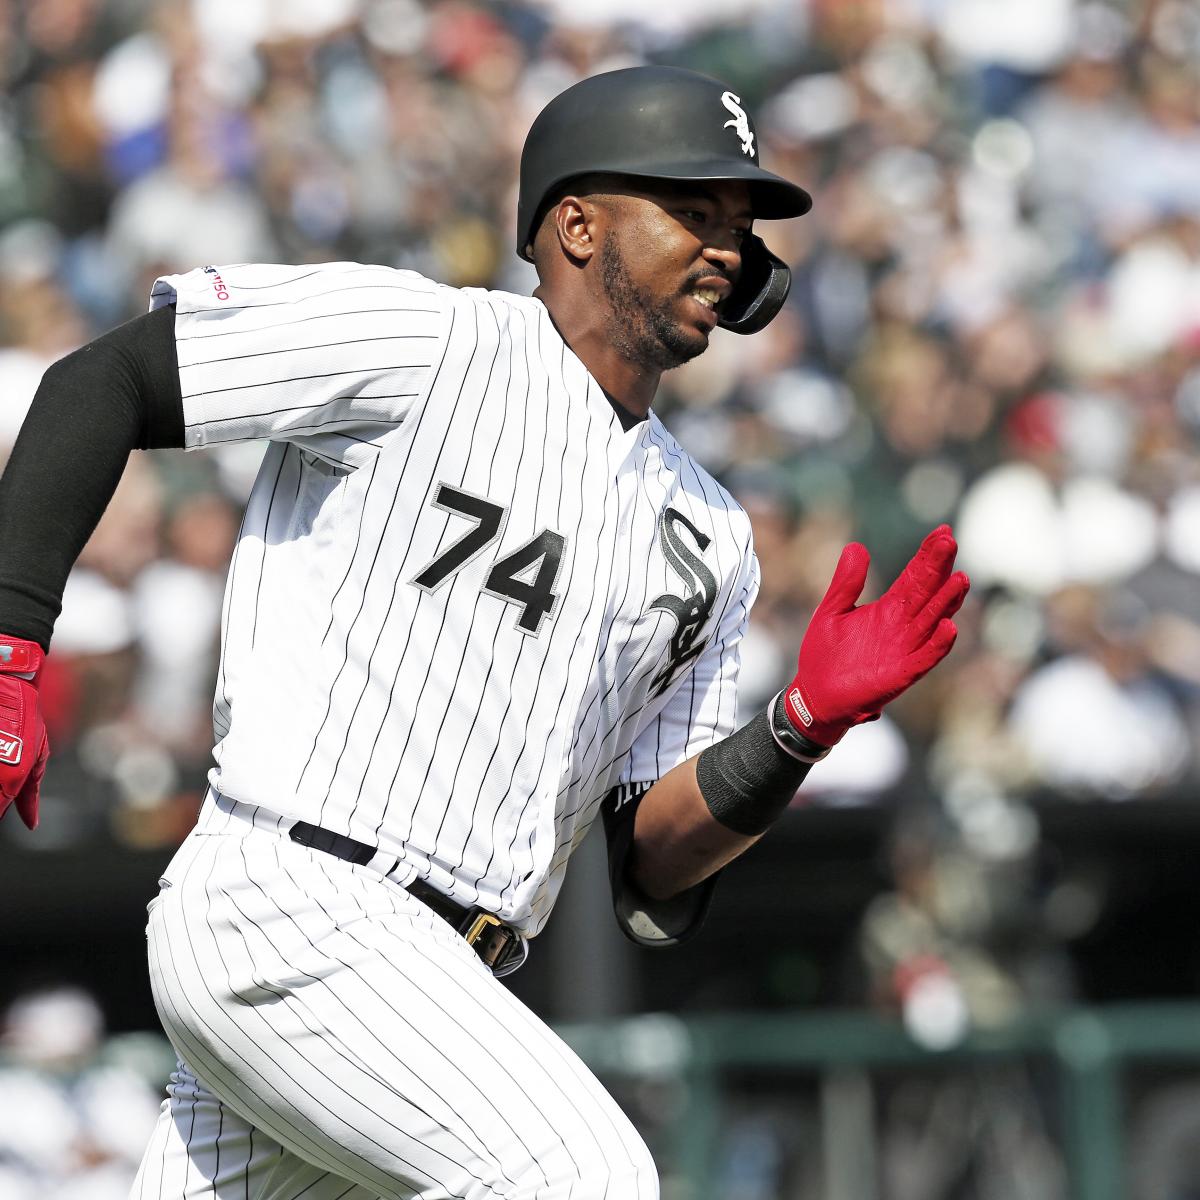 WATCH: White Sox's Eloy Jimenez blasts 428-foot home run to center